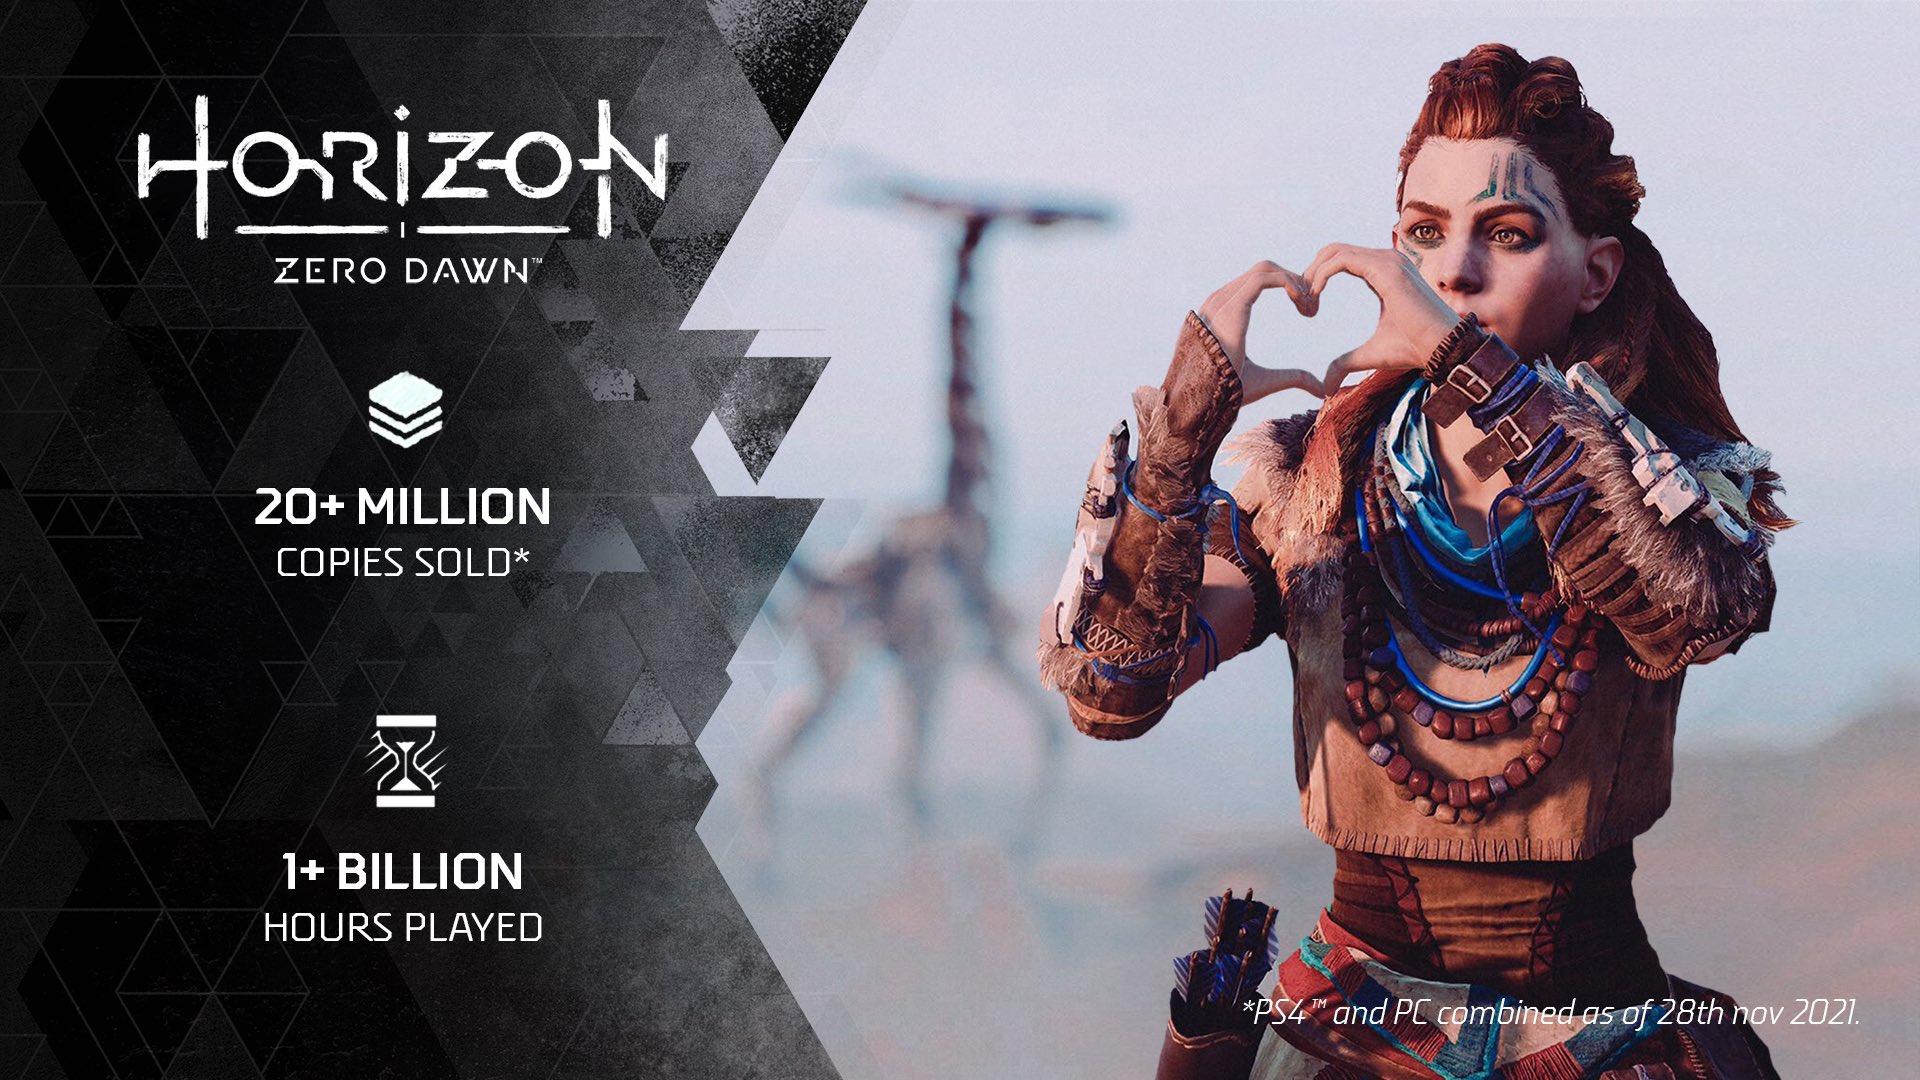 20 minutes of exclusive Horizon: Zero Dawn gameplay